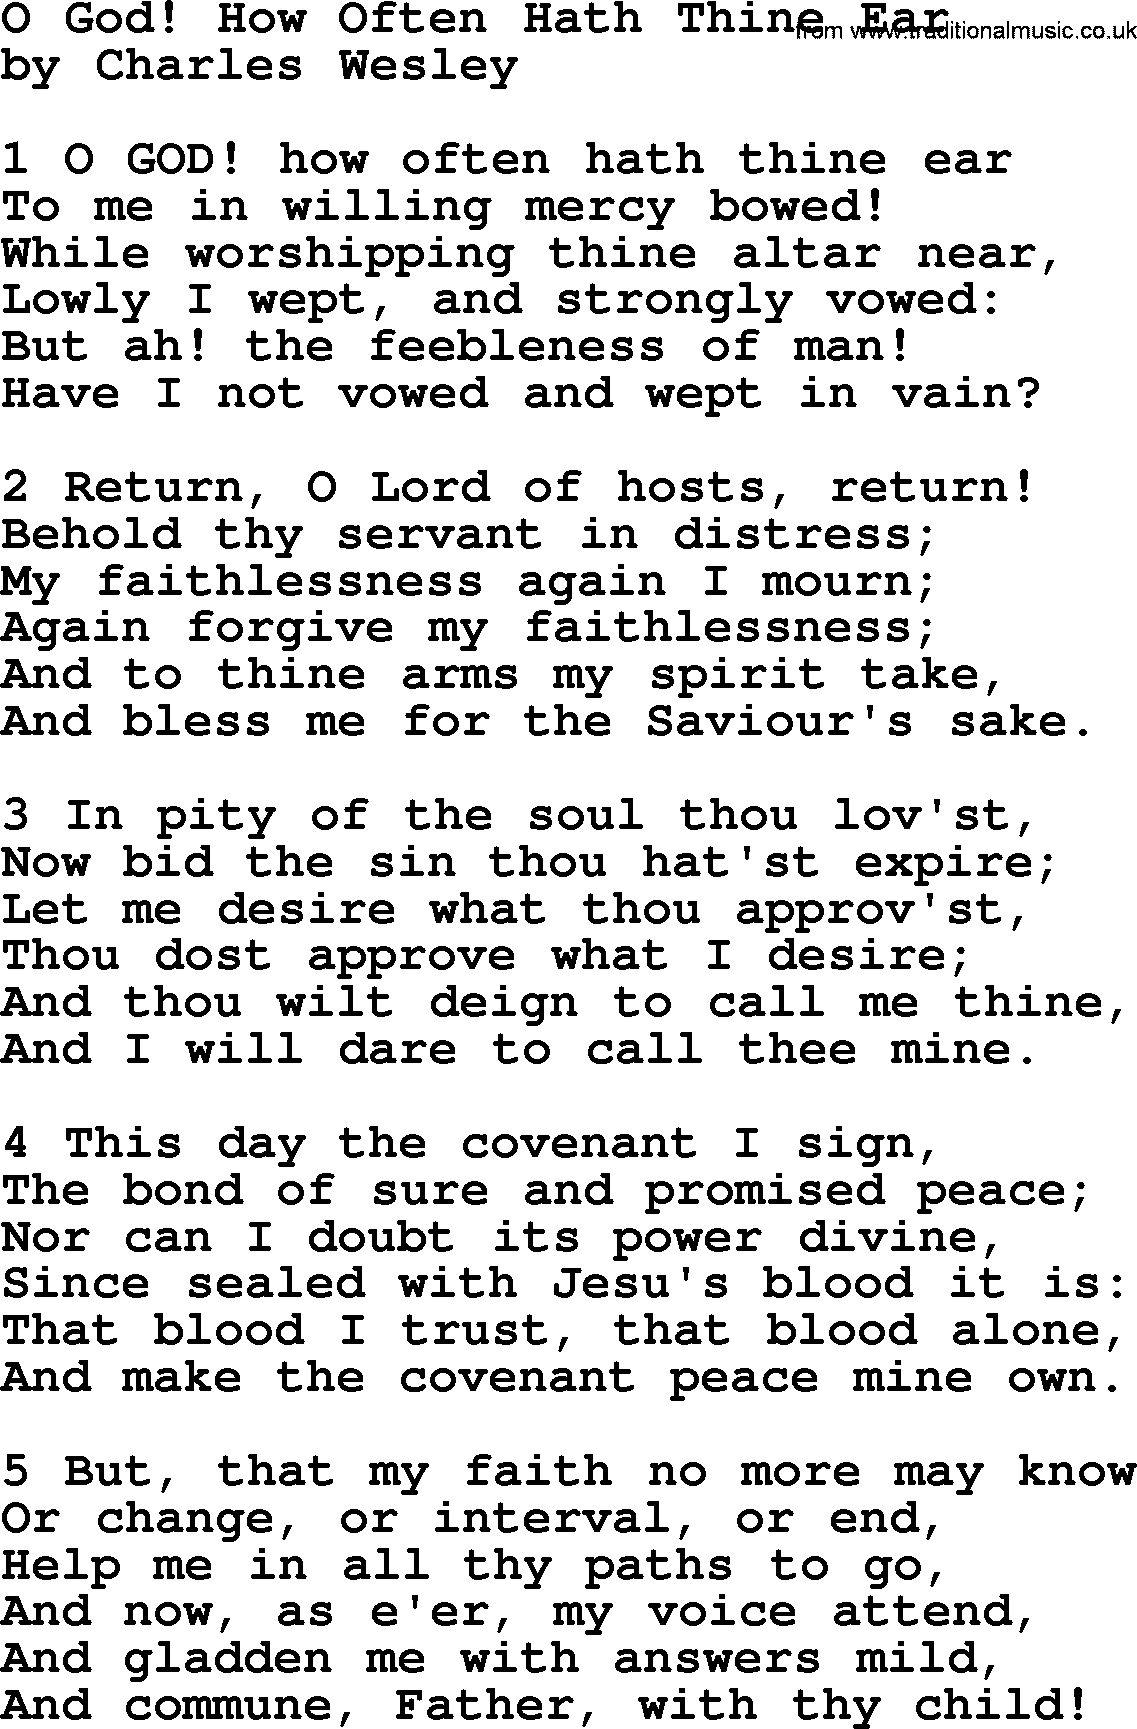 Charles Wesley hymn: O God! How Often Hath Thine Ear, lyrics